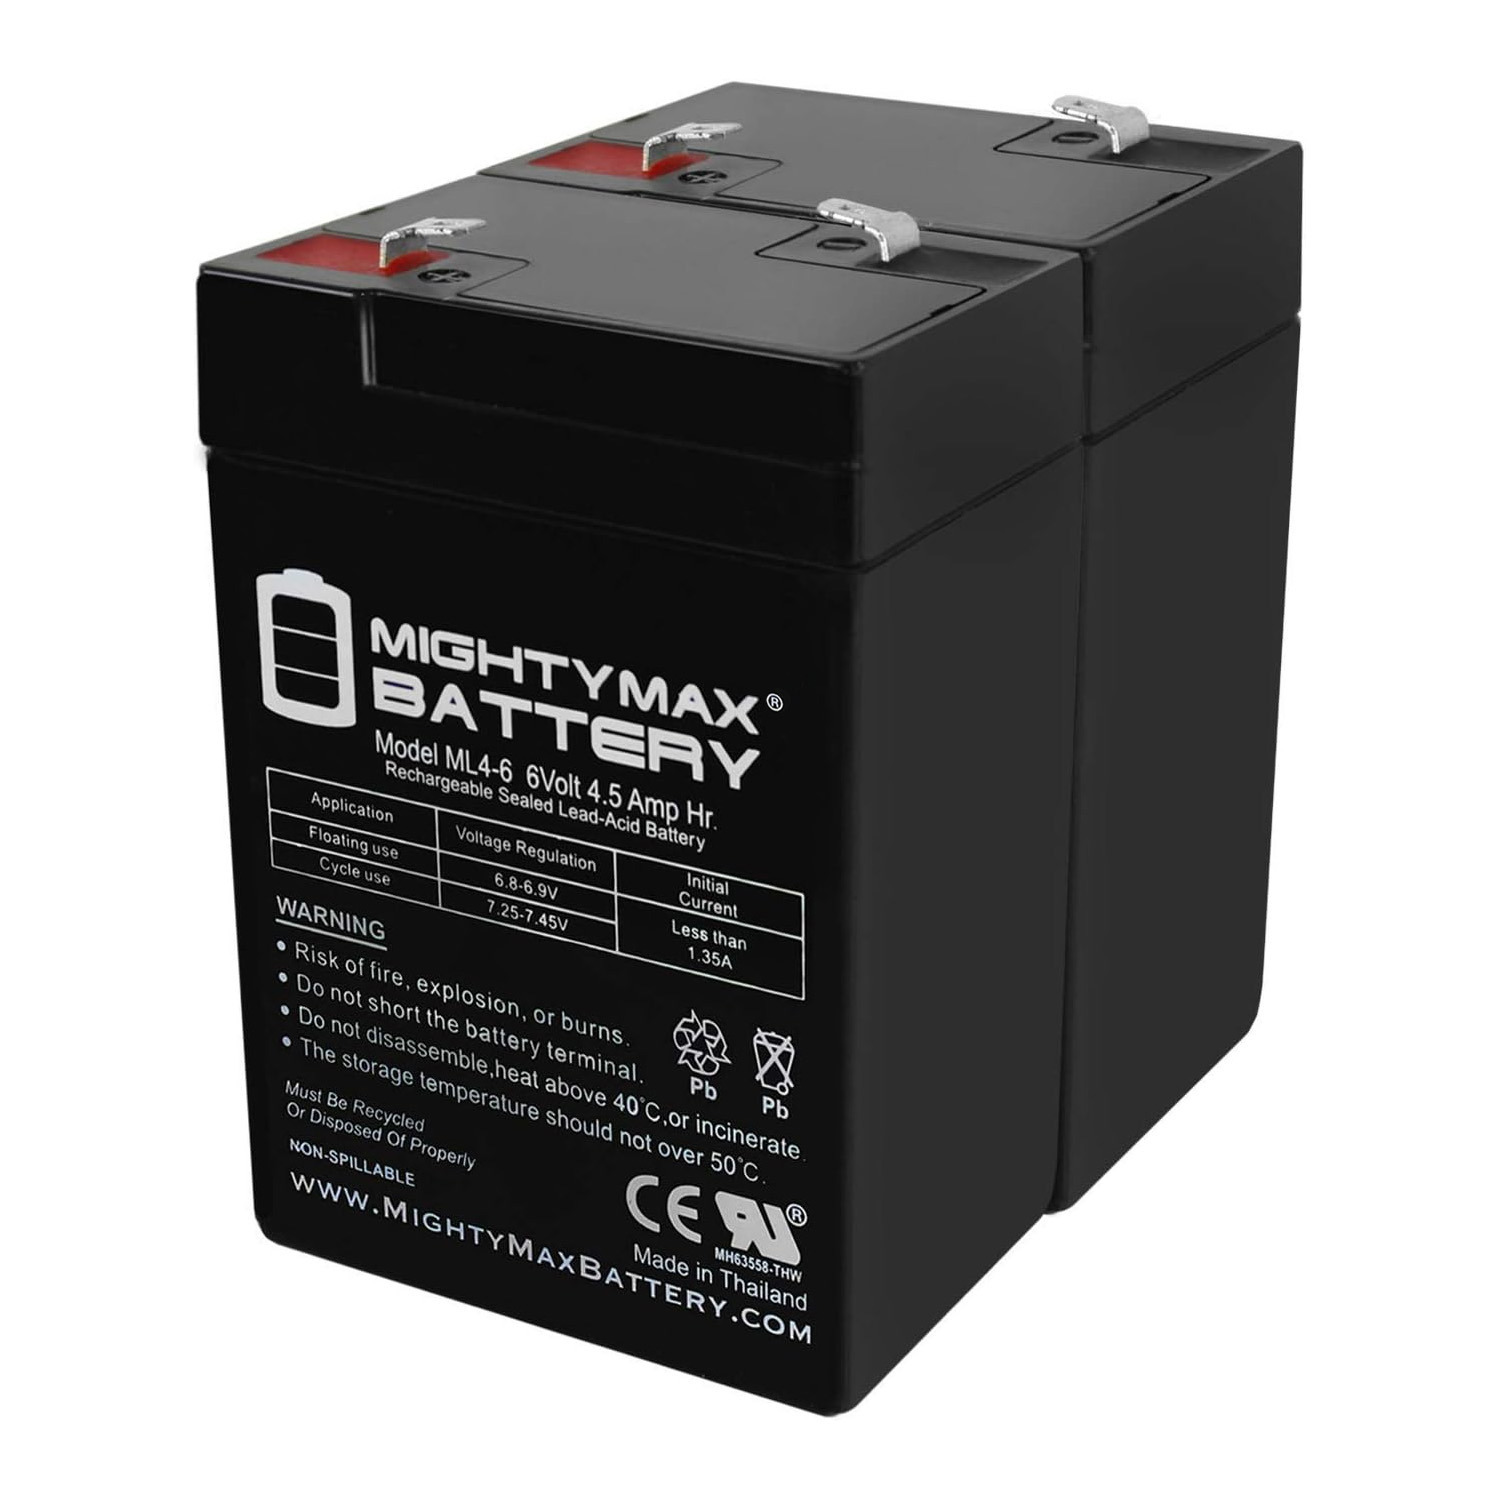 6V 4.5AH SLA Replacement Battery for Emergi-Lite AGM M3 - 2 Pack